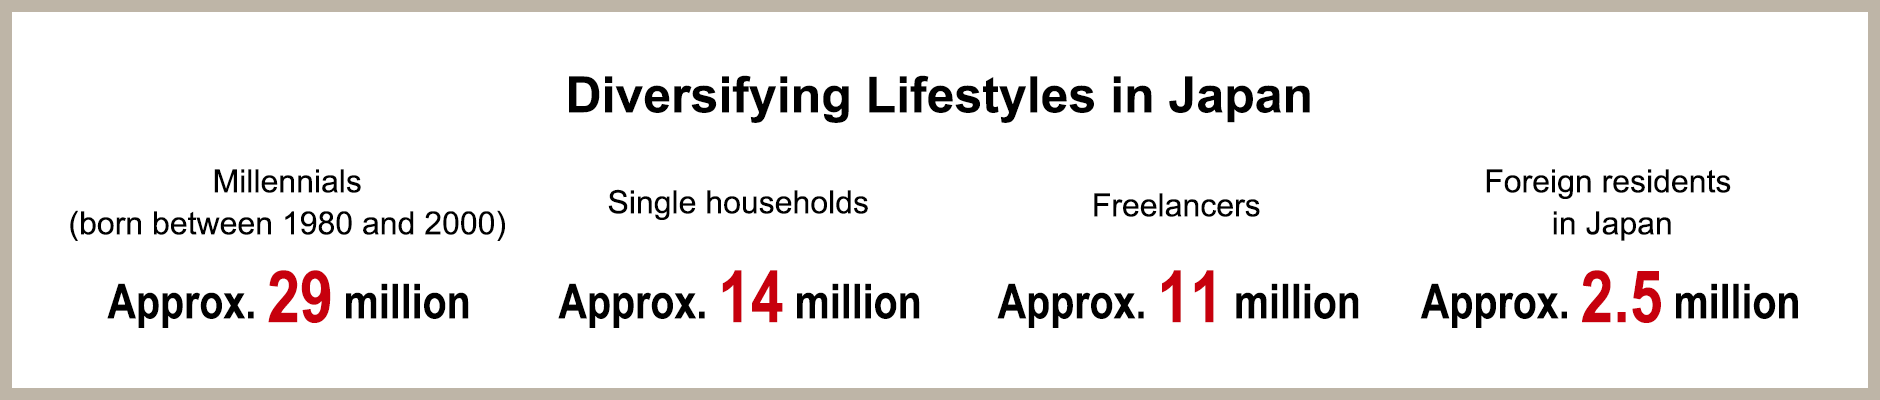 figure: Diversifying Lifestyles in Japan